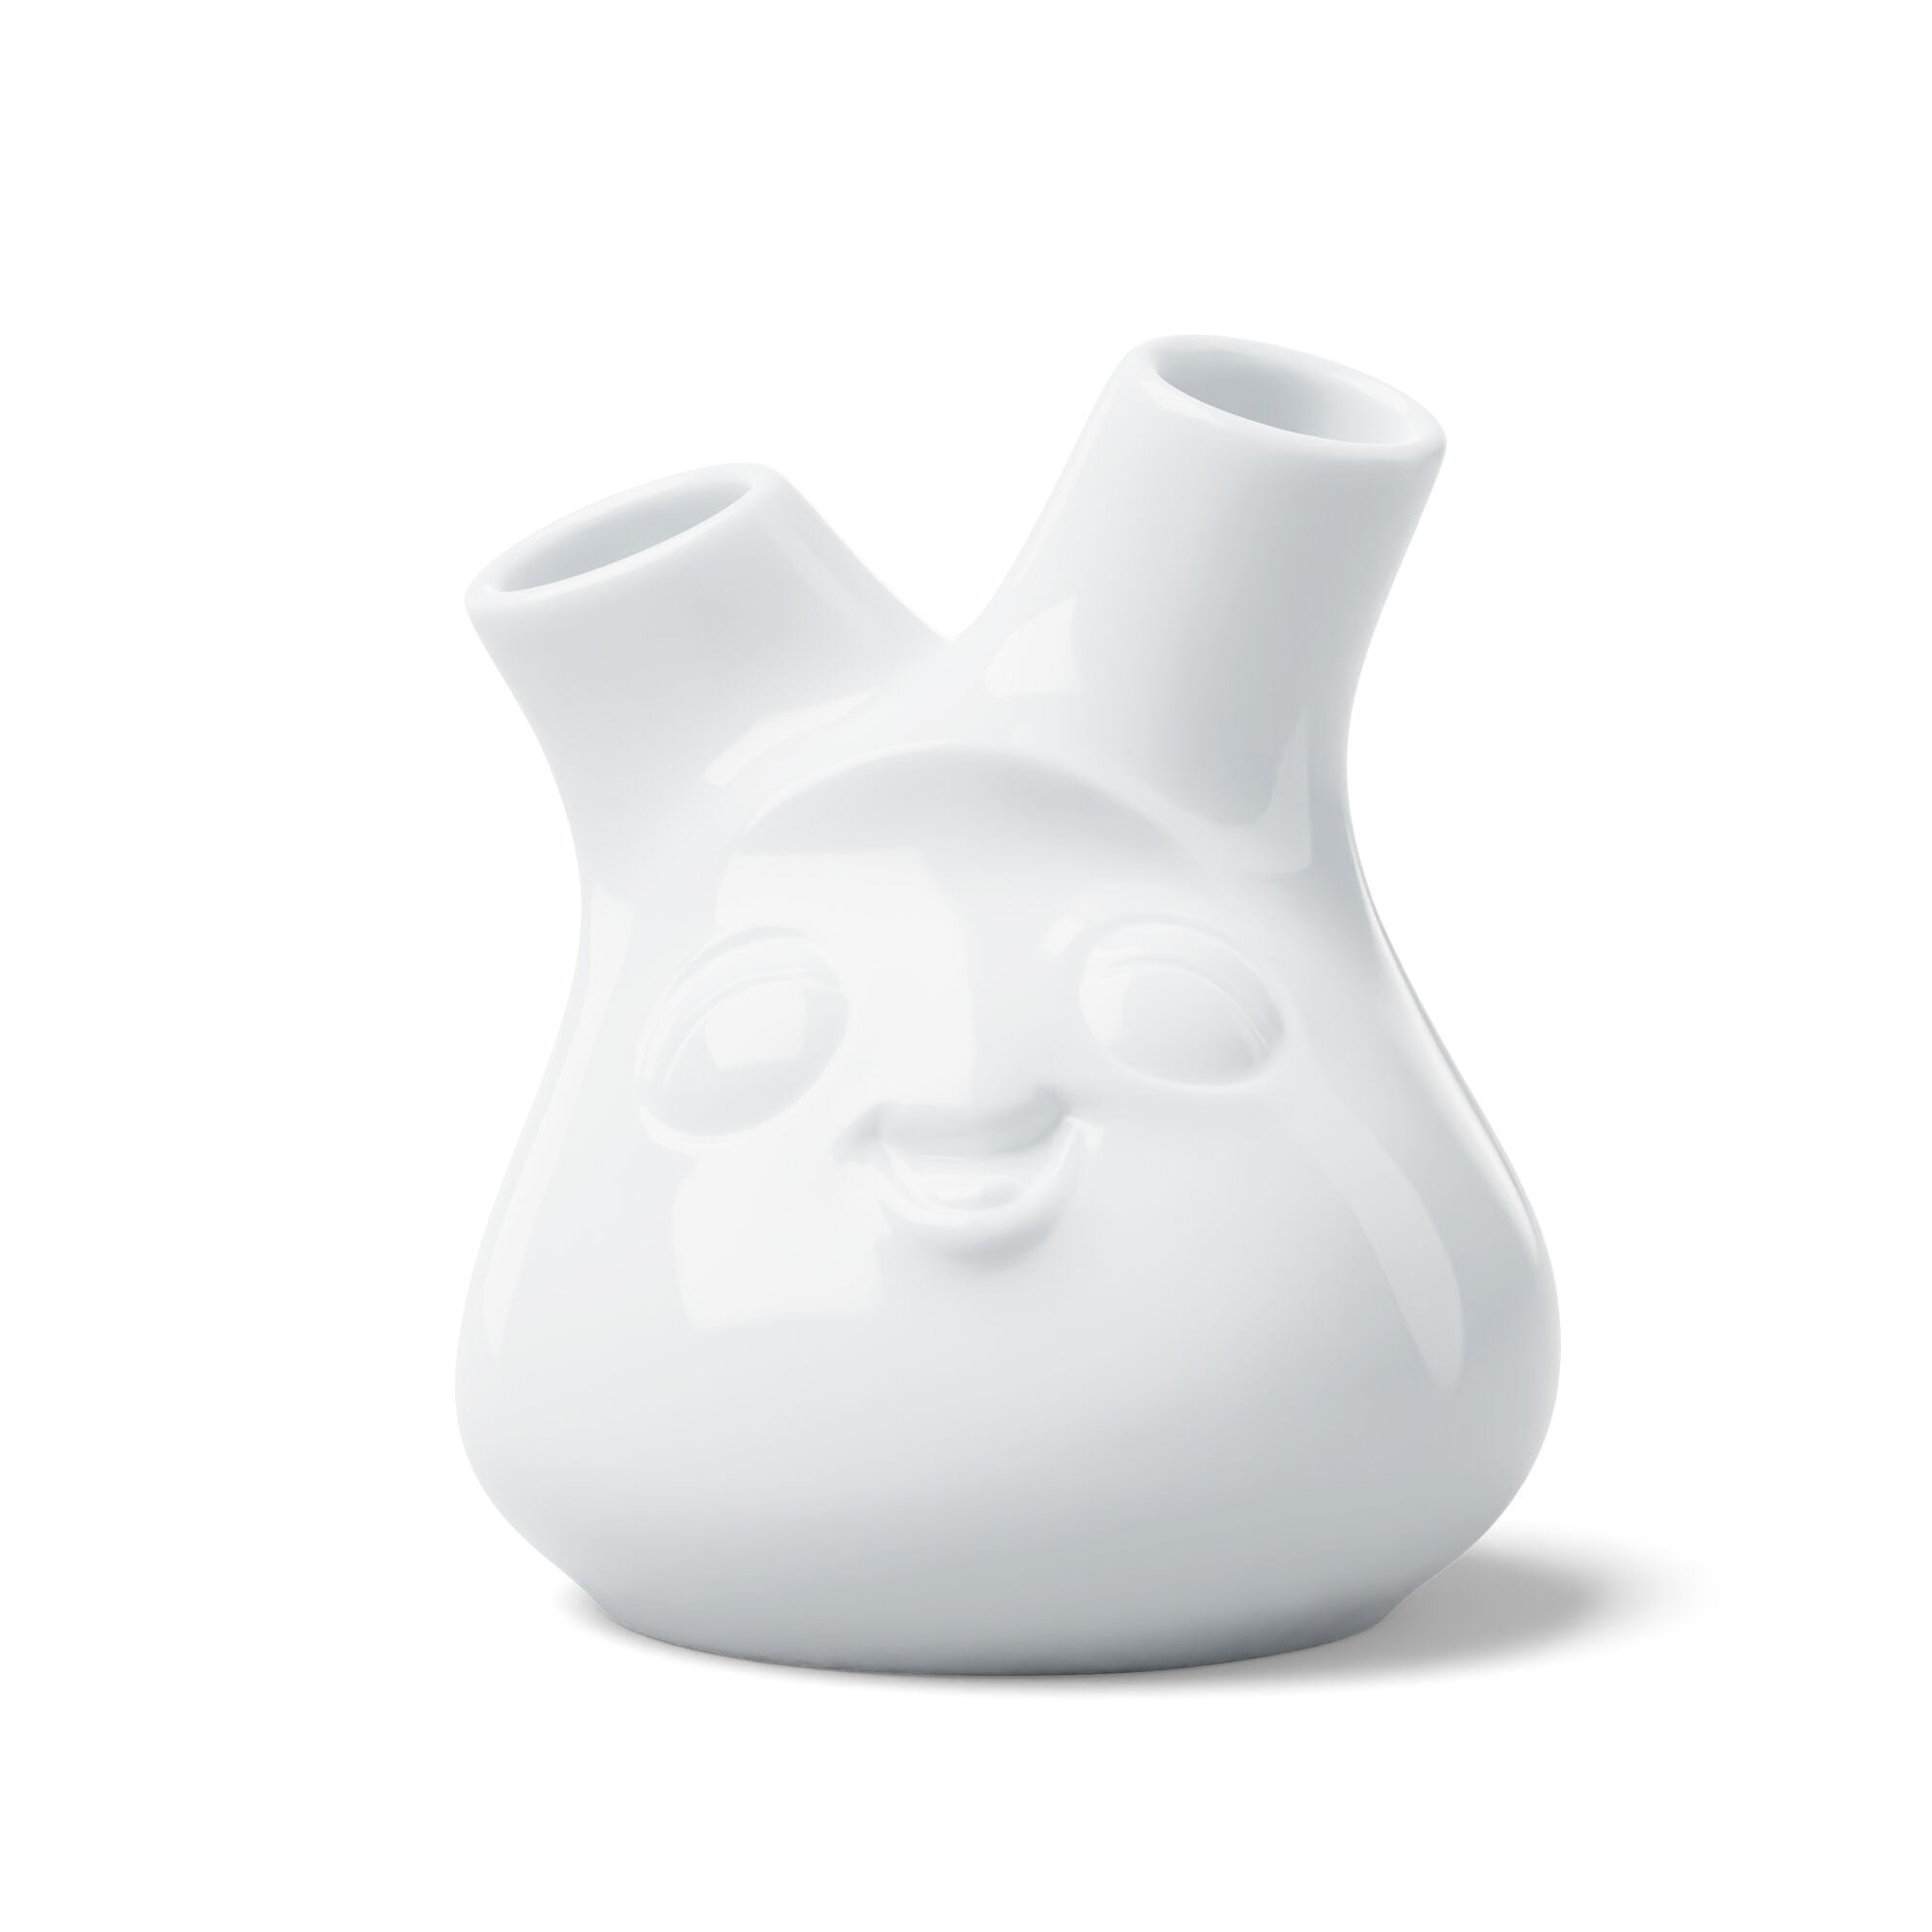 Vase small "Kess", white, 10cm - TV cups